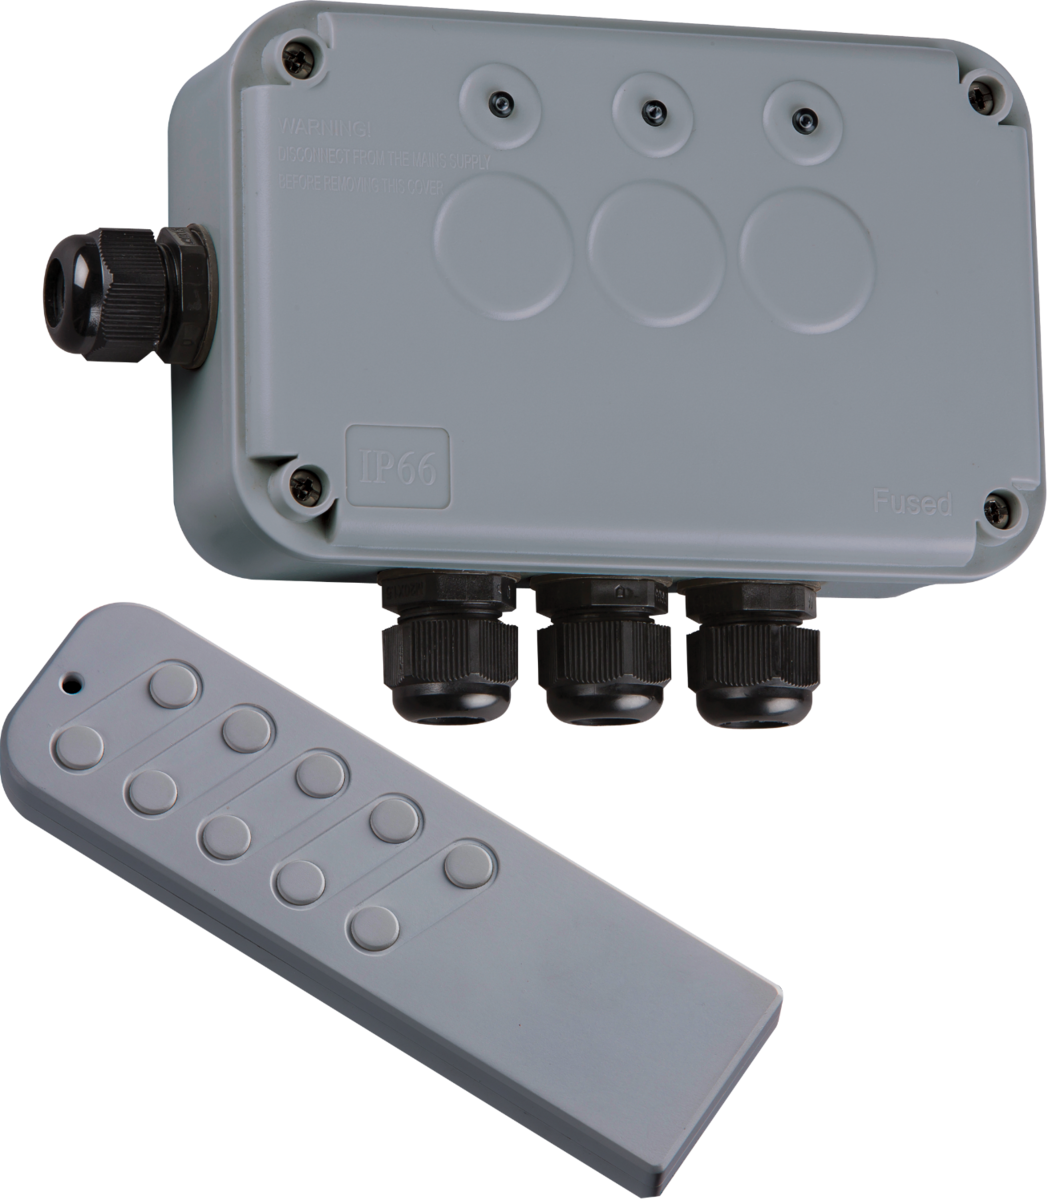 Knightsbridge IP66 13A 3G 5G Outdoor Waterproof Switch Box